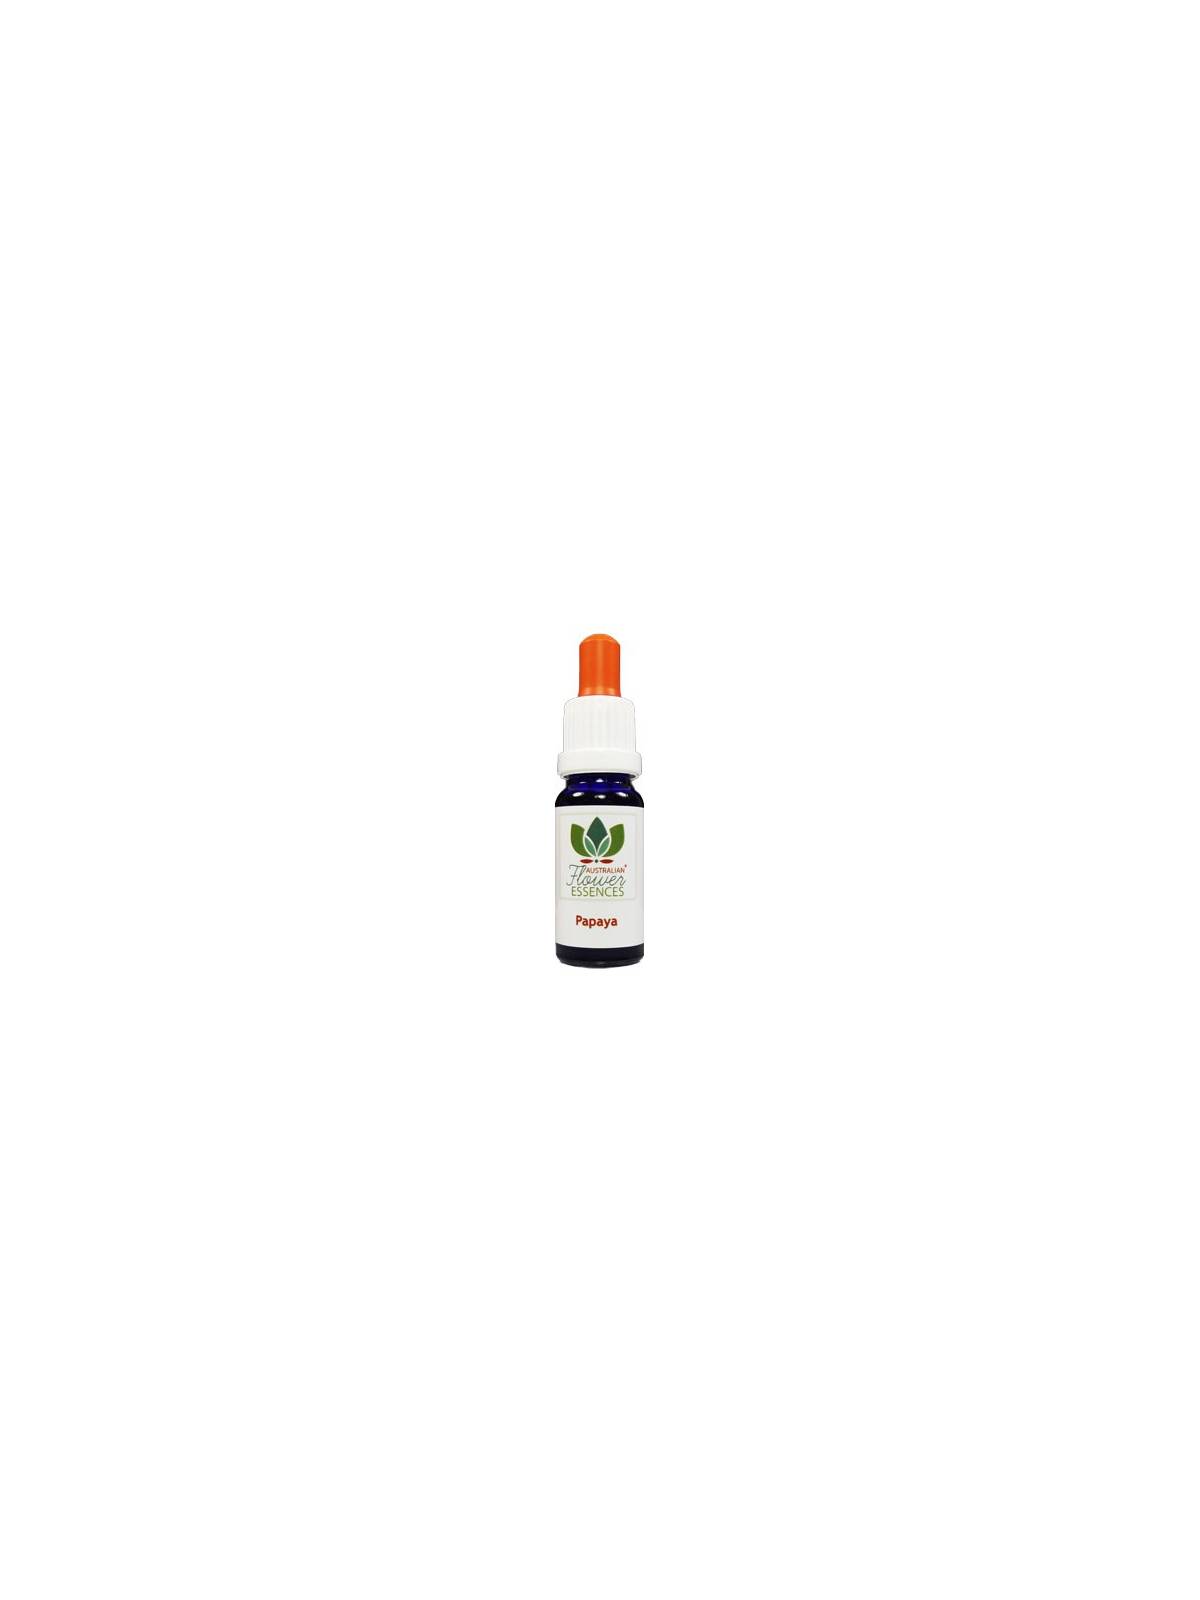 Papaya / Paw Paw Australian Flower Essences bottle